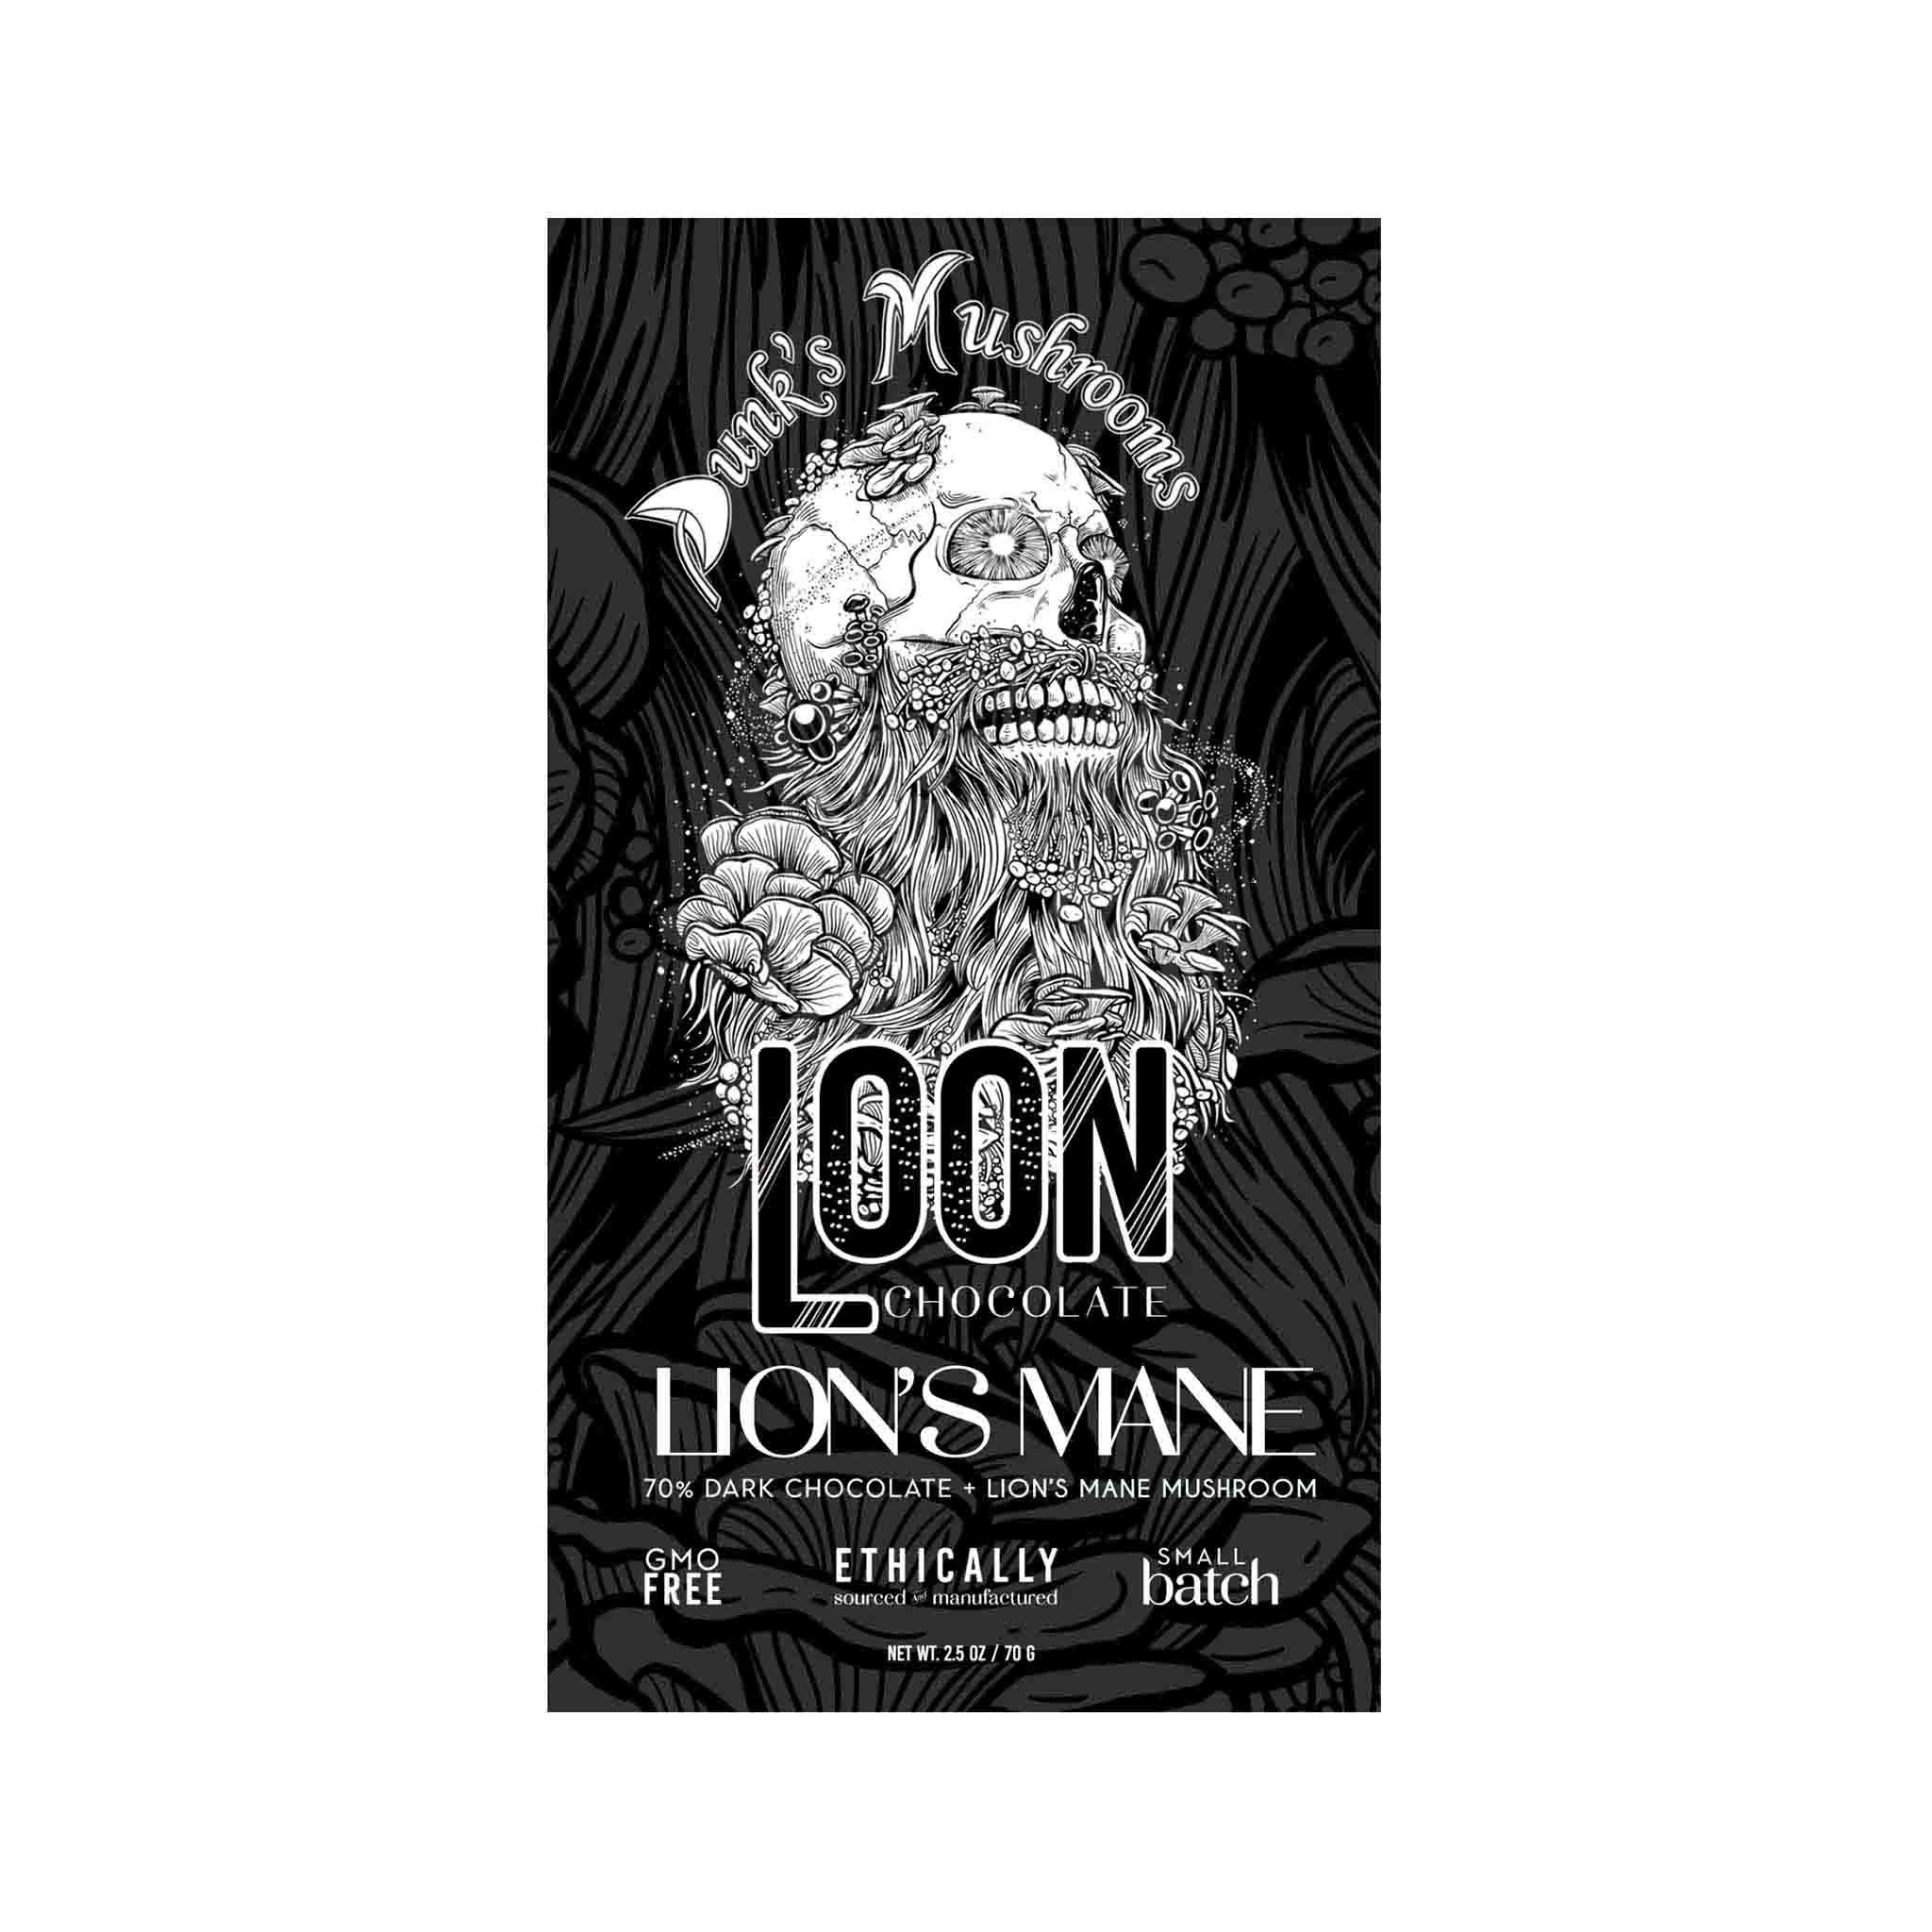 LOON LION'S MANE CHOCOLATE 70% 70g